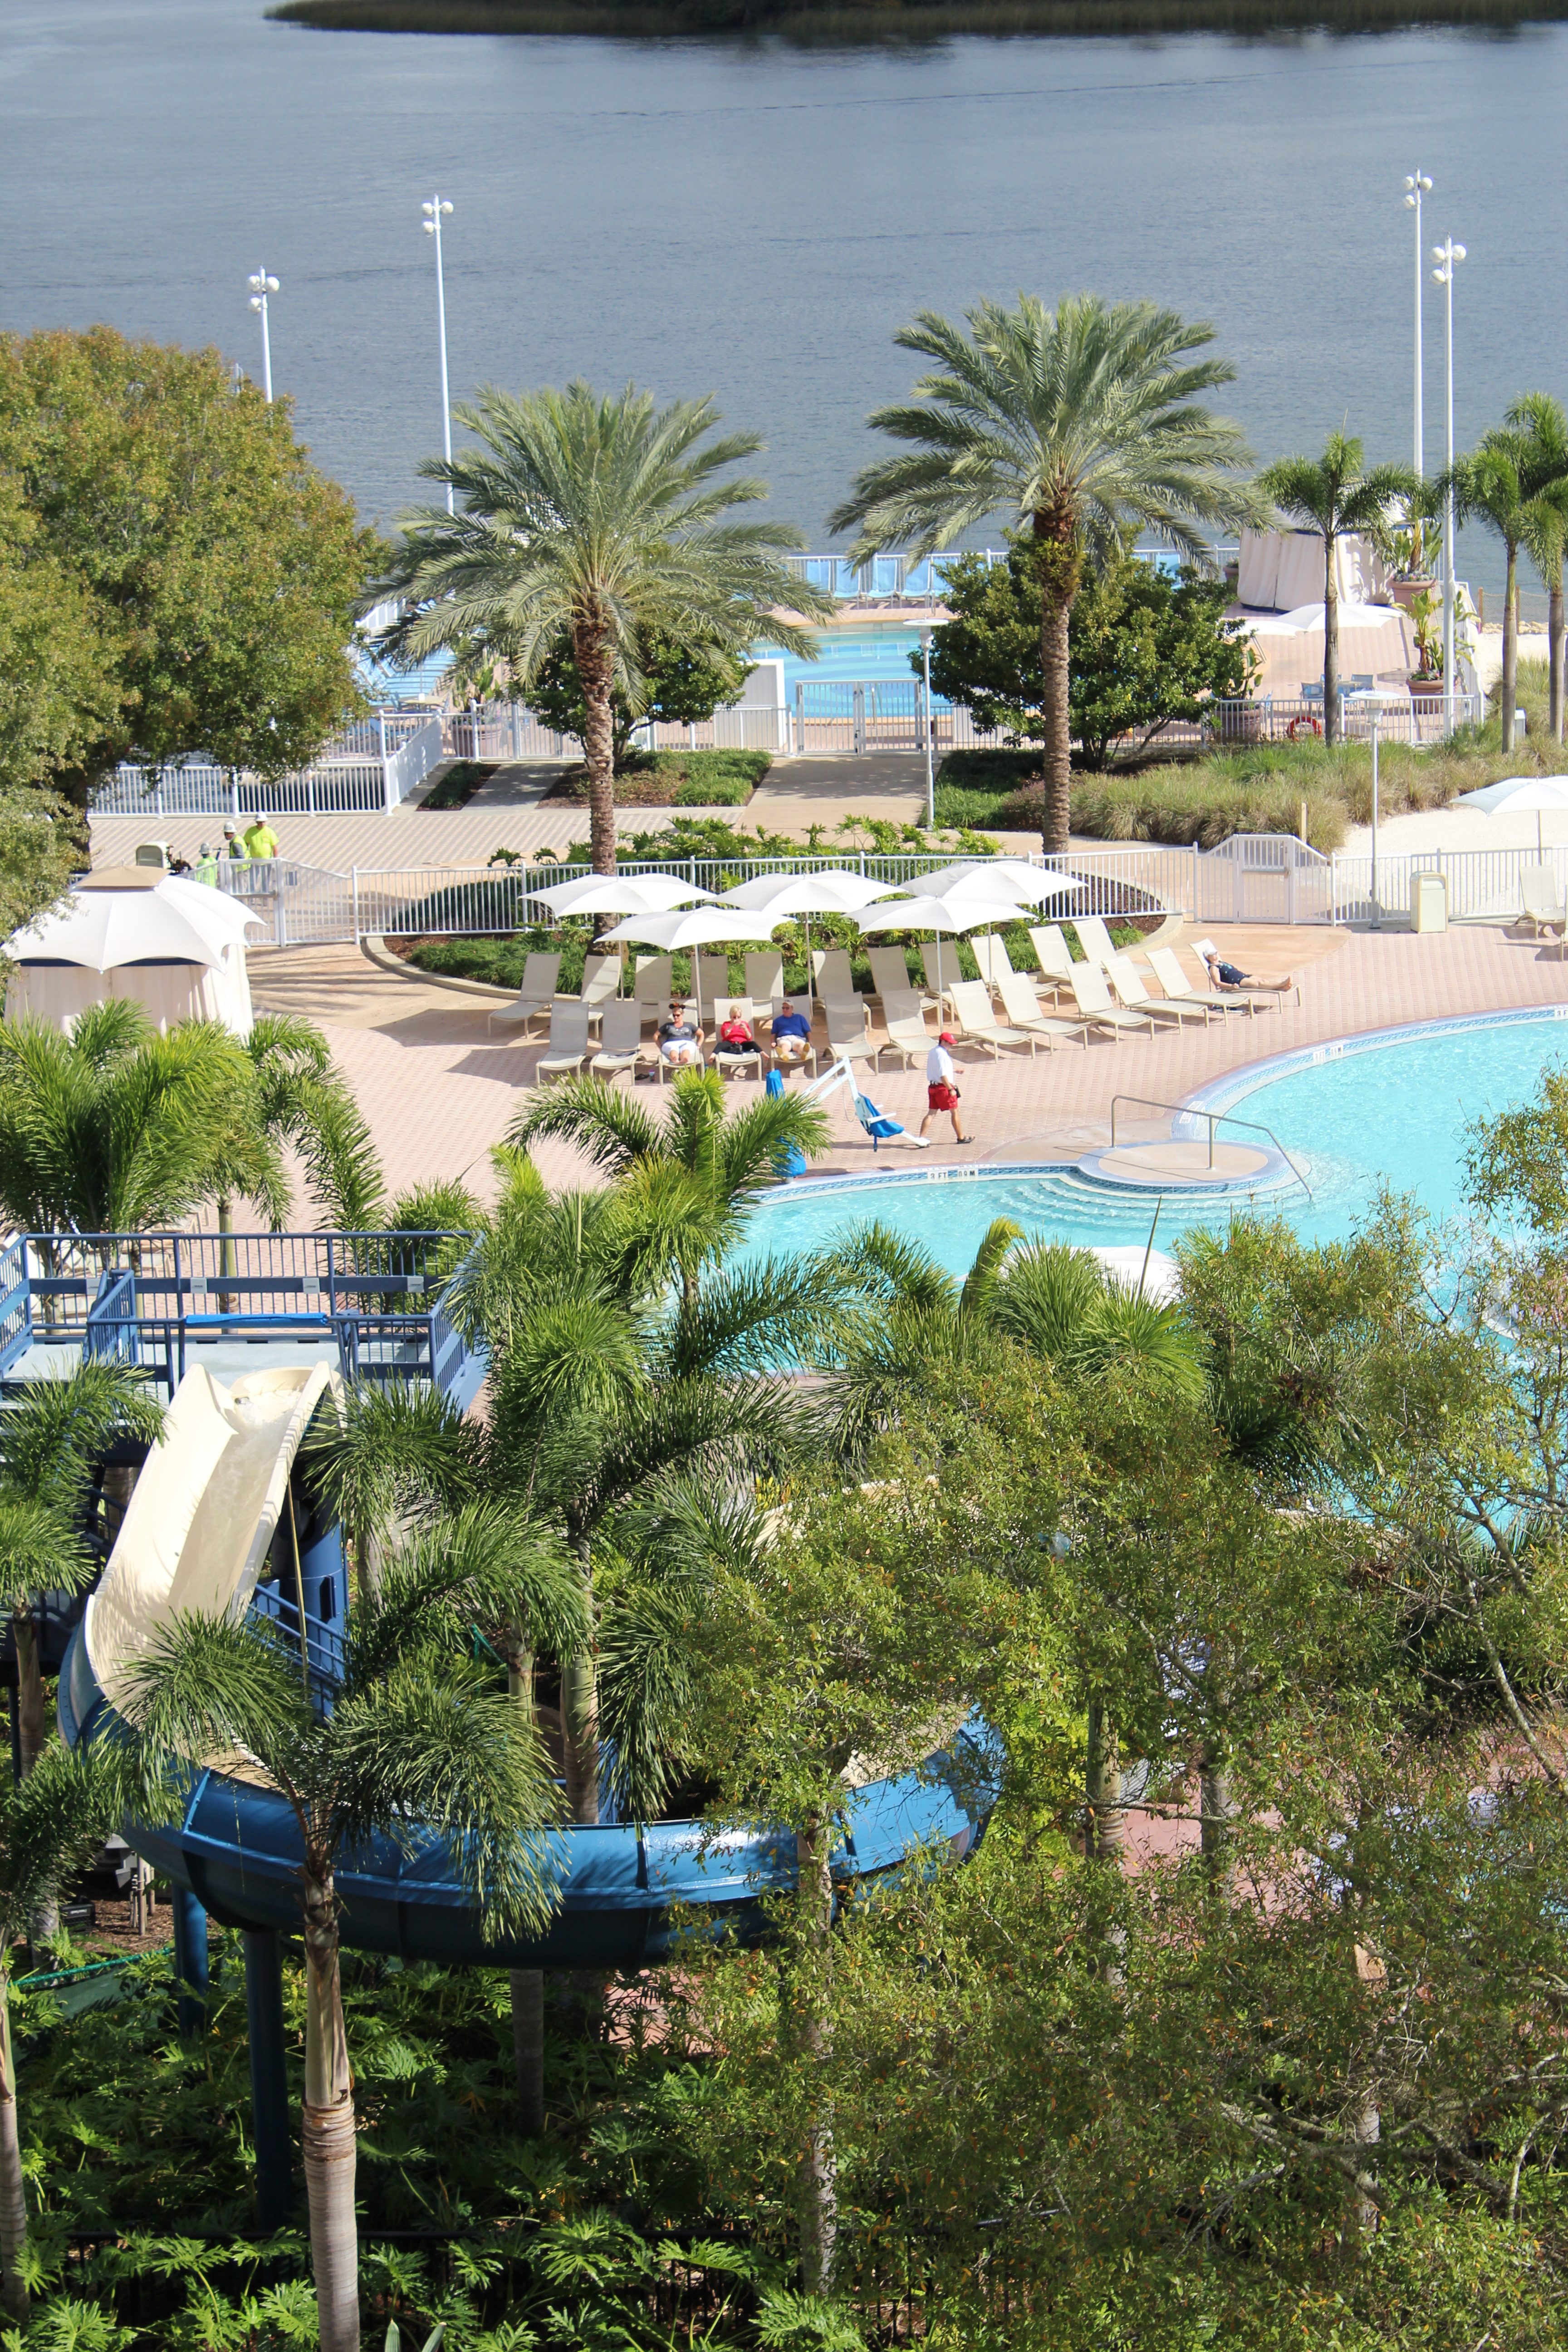 Disney Contemporary Resort's Pool area